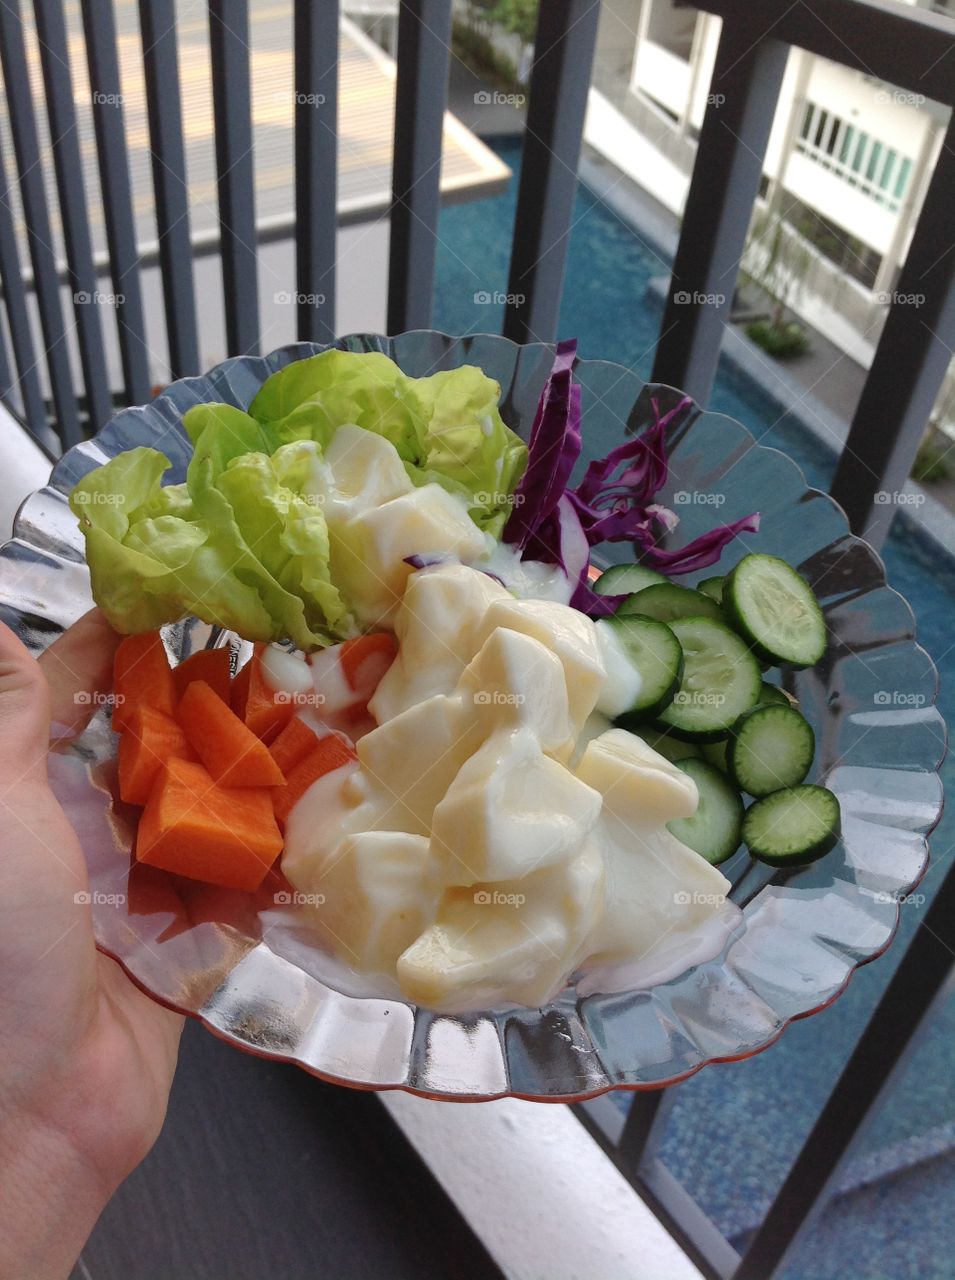 DIY Salad. Eat healthy, make your own
